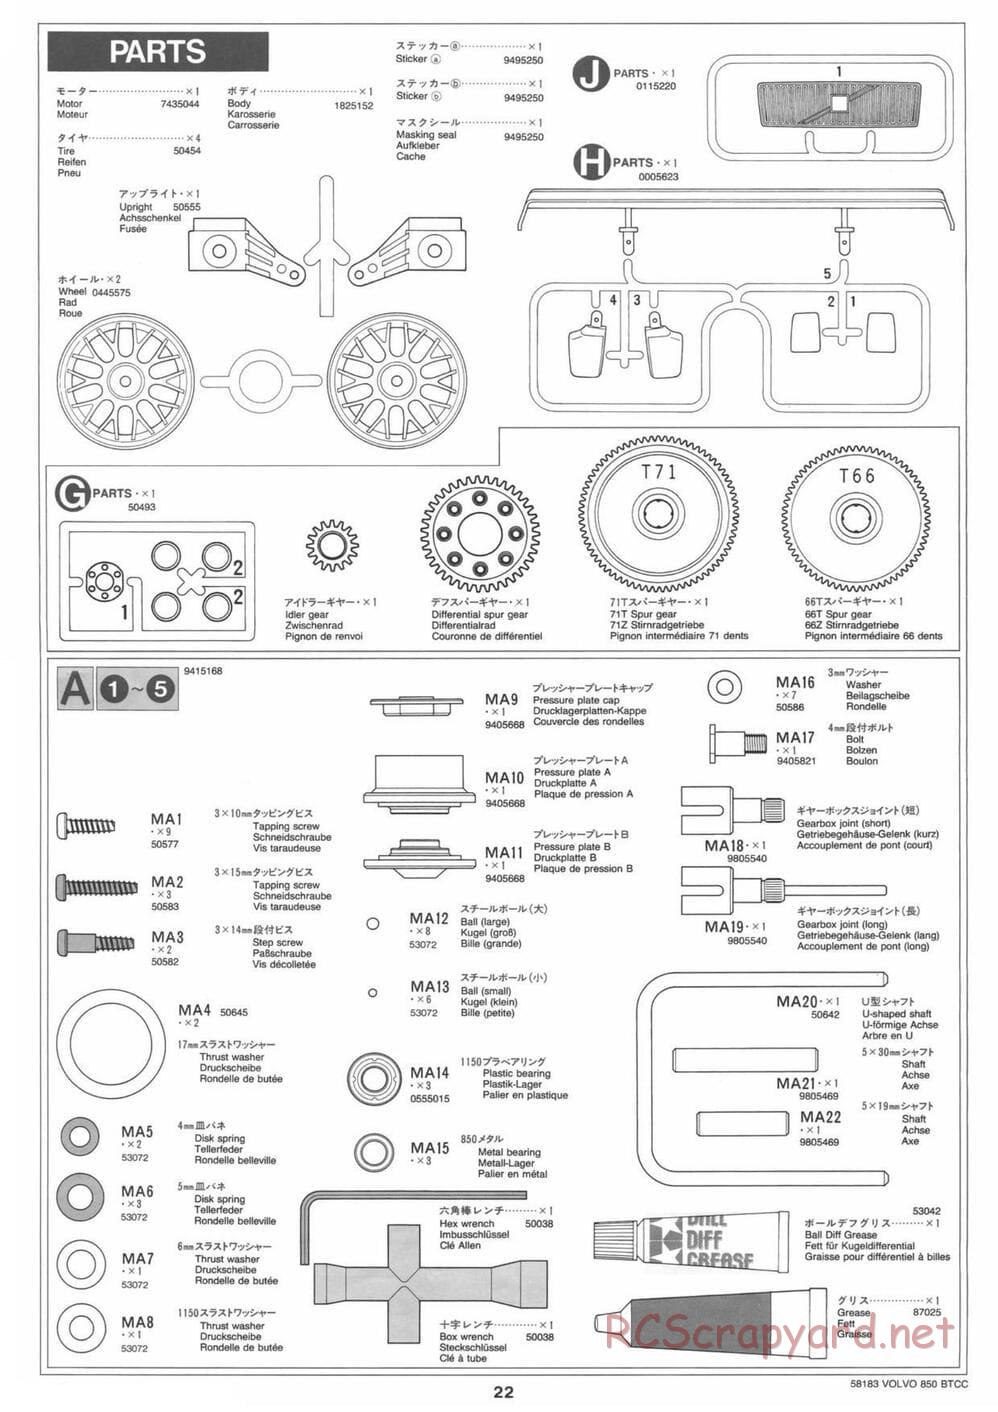 Tamiya - Volvo 850 BTCC - FF-01 Chassis - Manual - Page 22